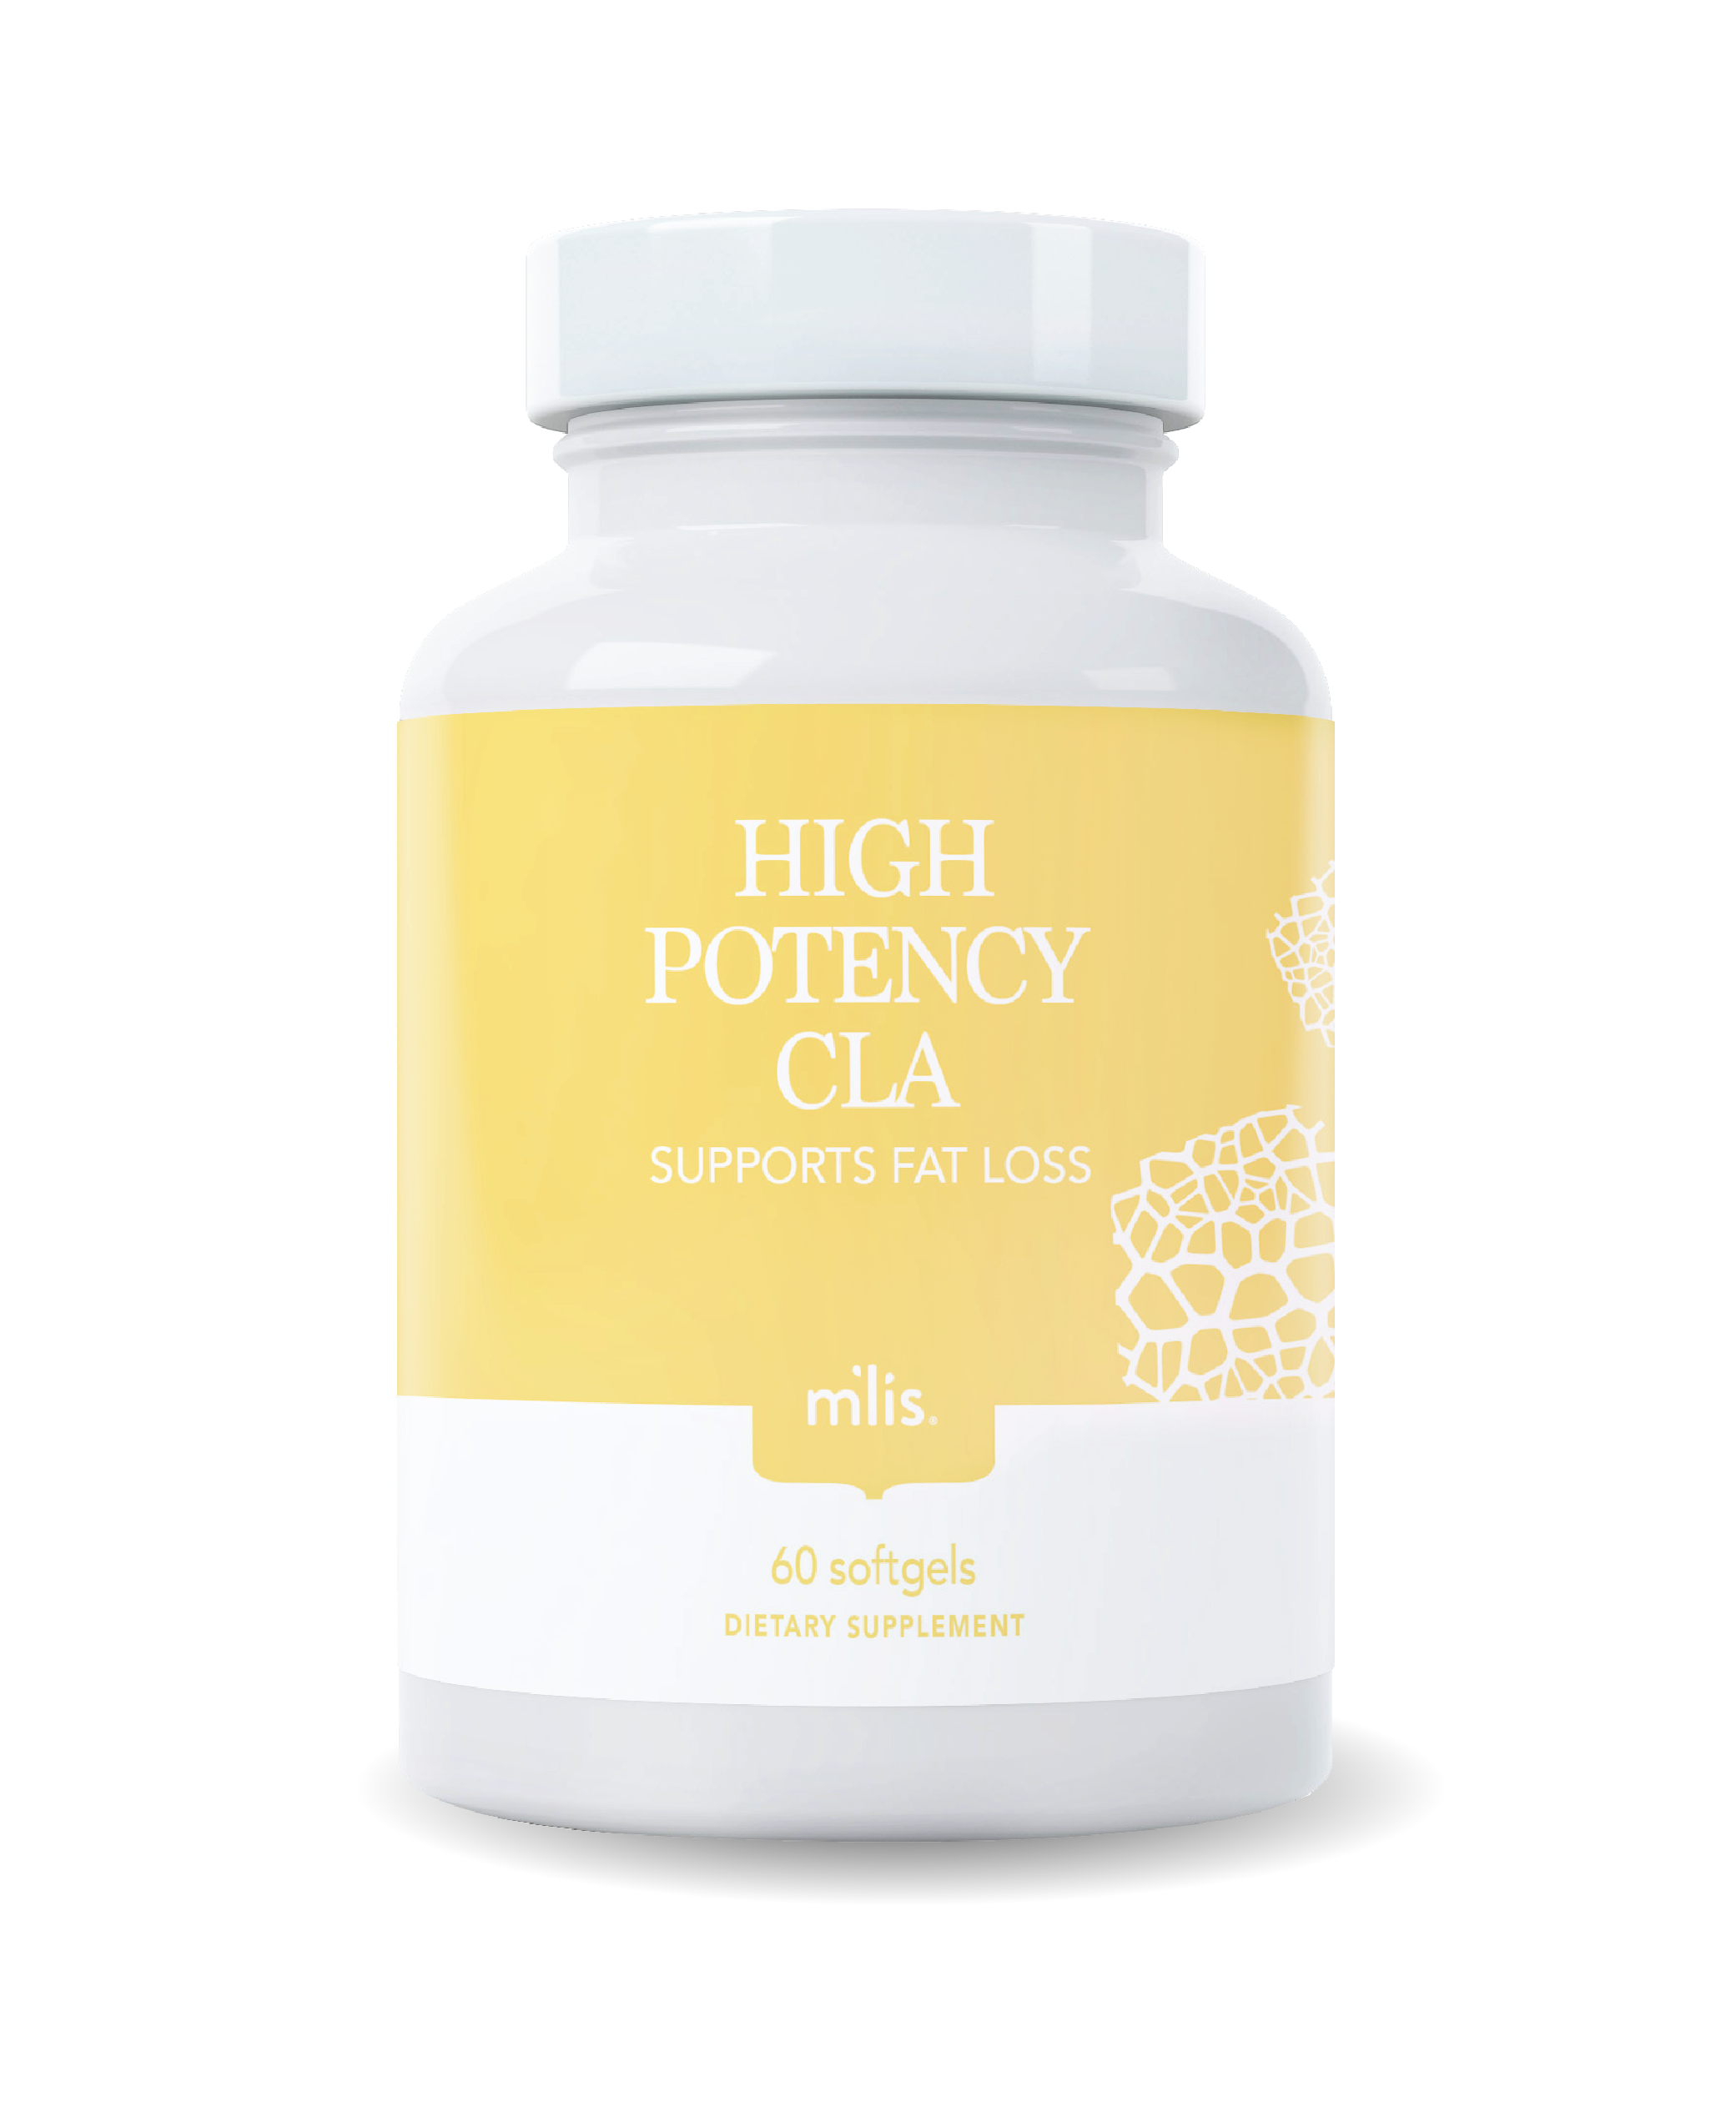 High Potency CLA